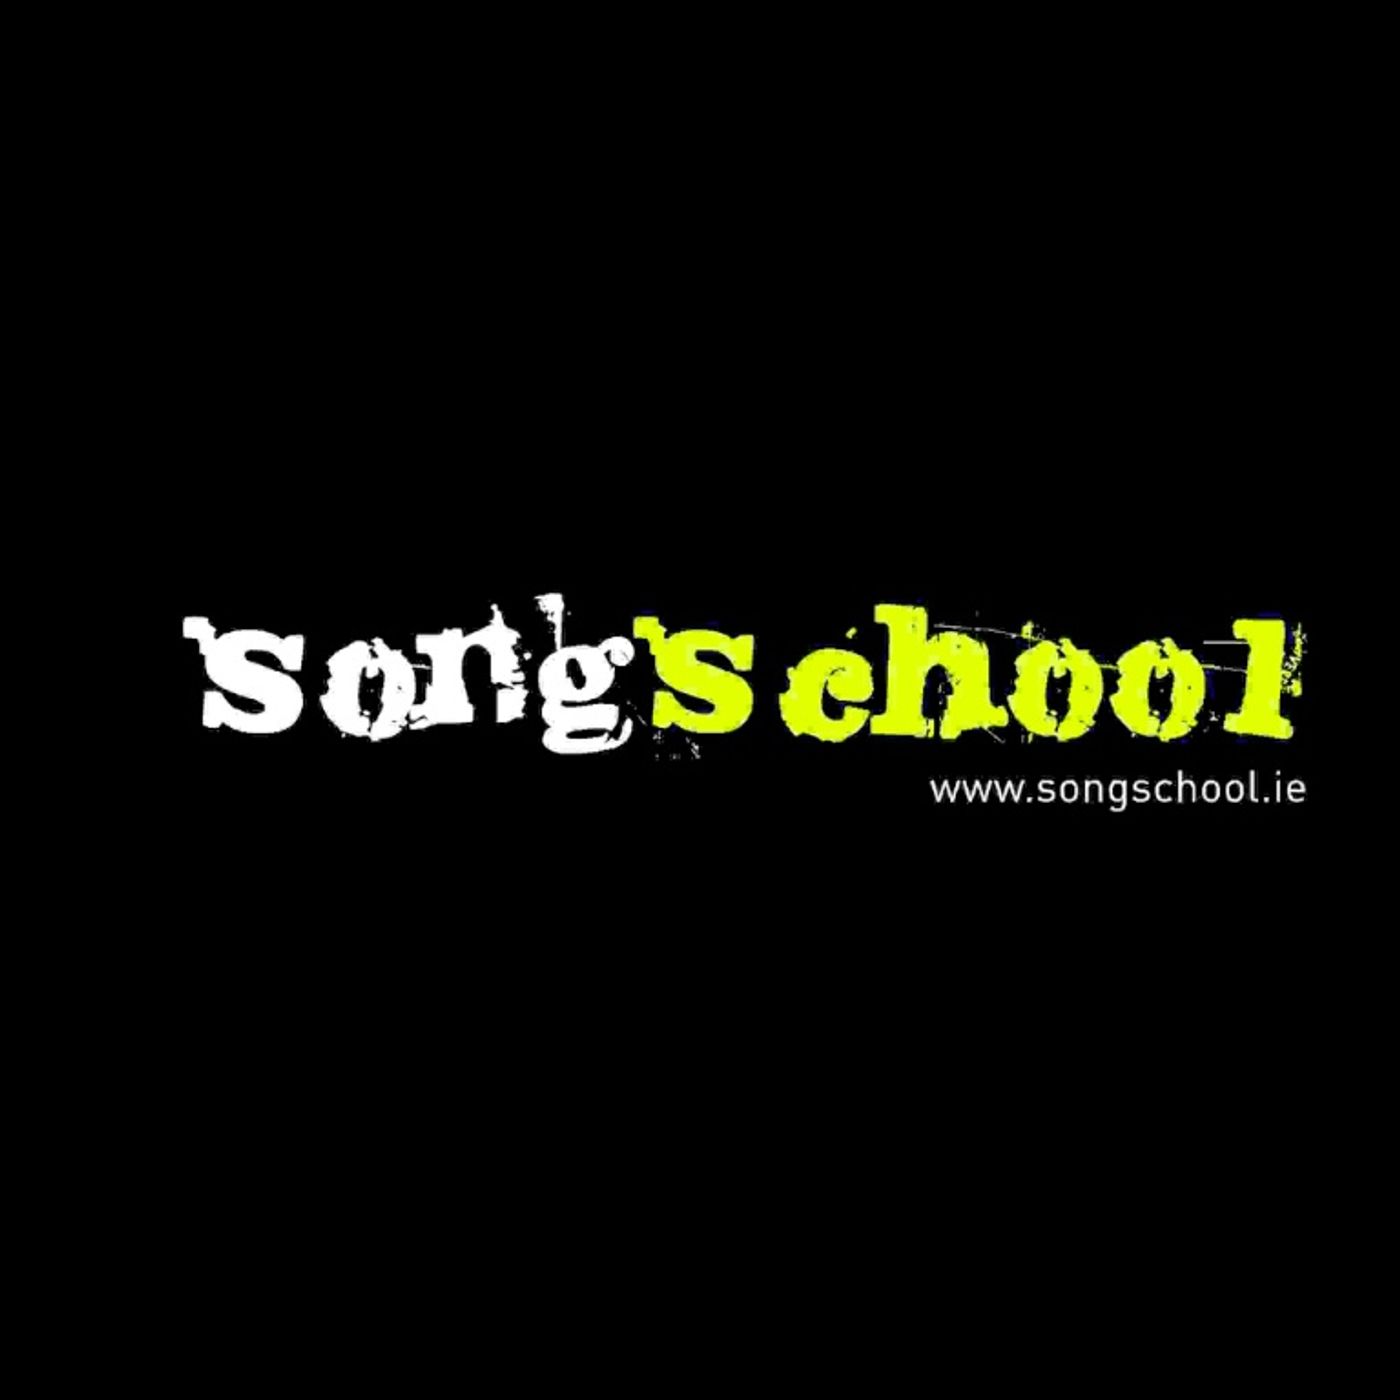 The Songschool Show @ Colaiste Chiaran